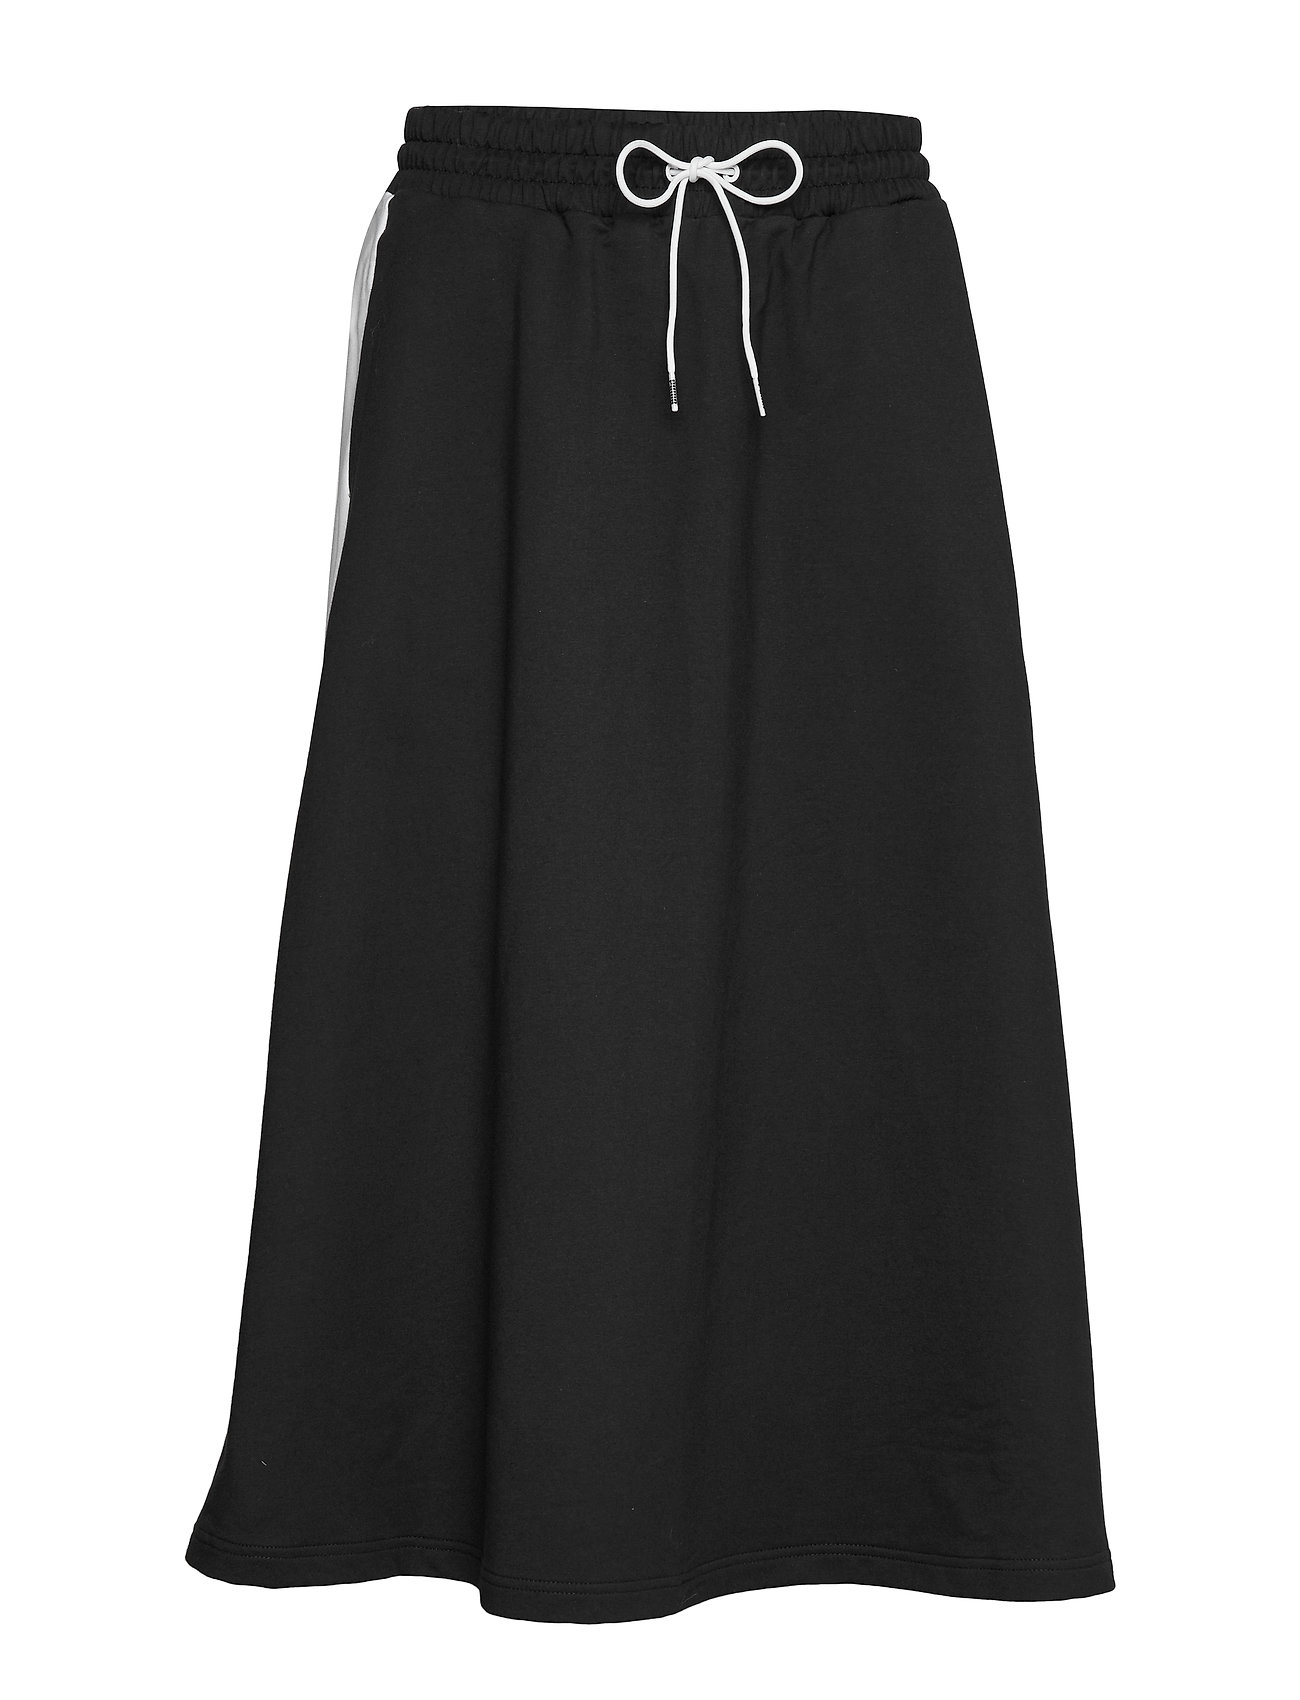 puma long skirt